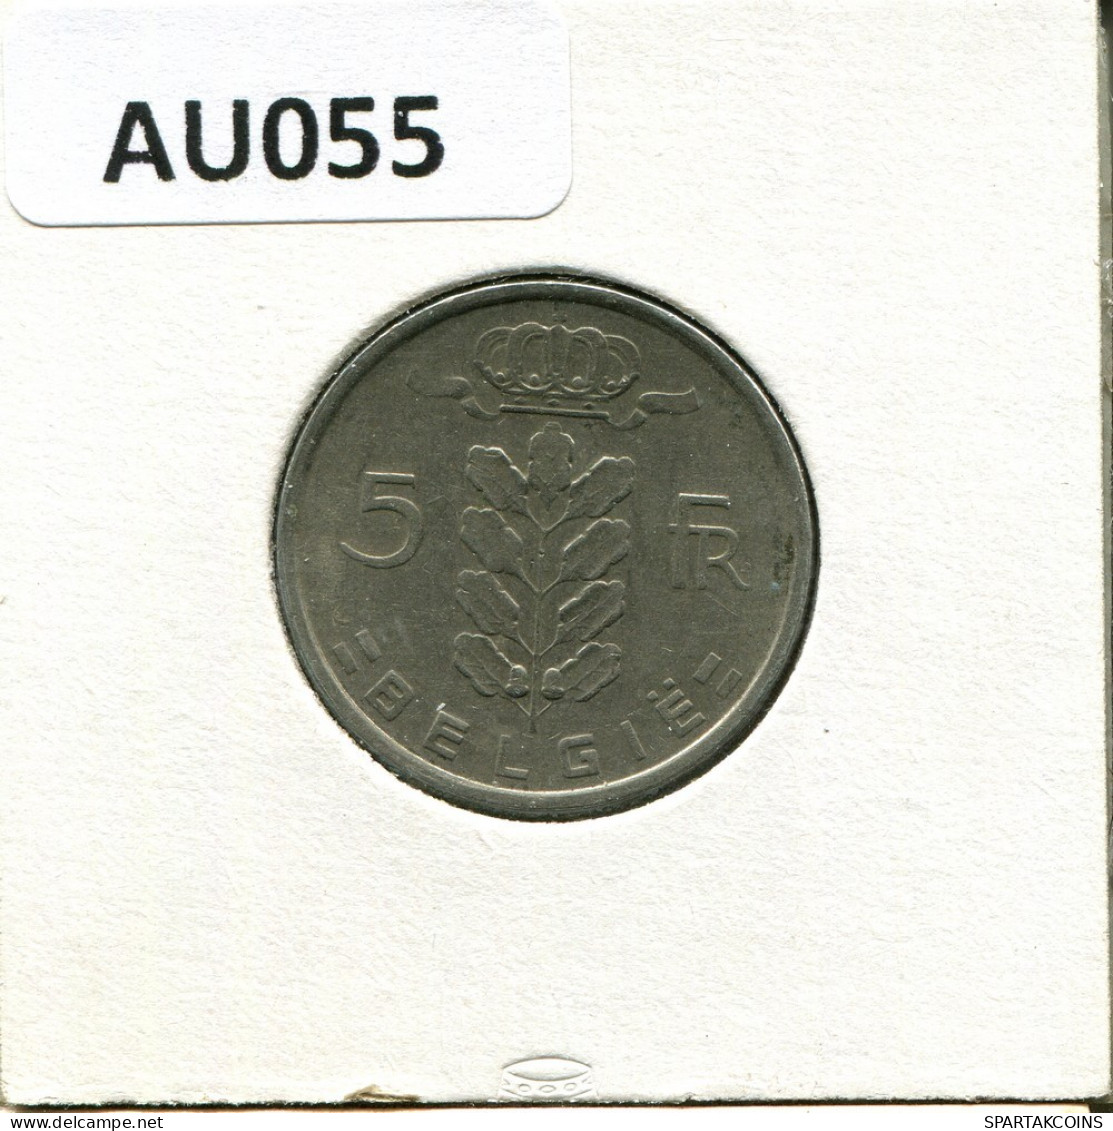 5 FRANCS 1949 DUTCH Text BELGIQUE BELGIUM Pièce #AU055.F.A - 5 Francs